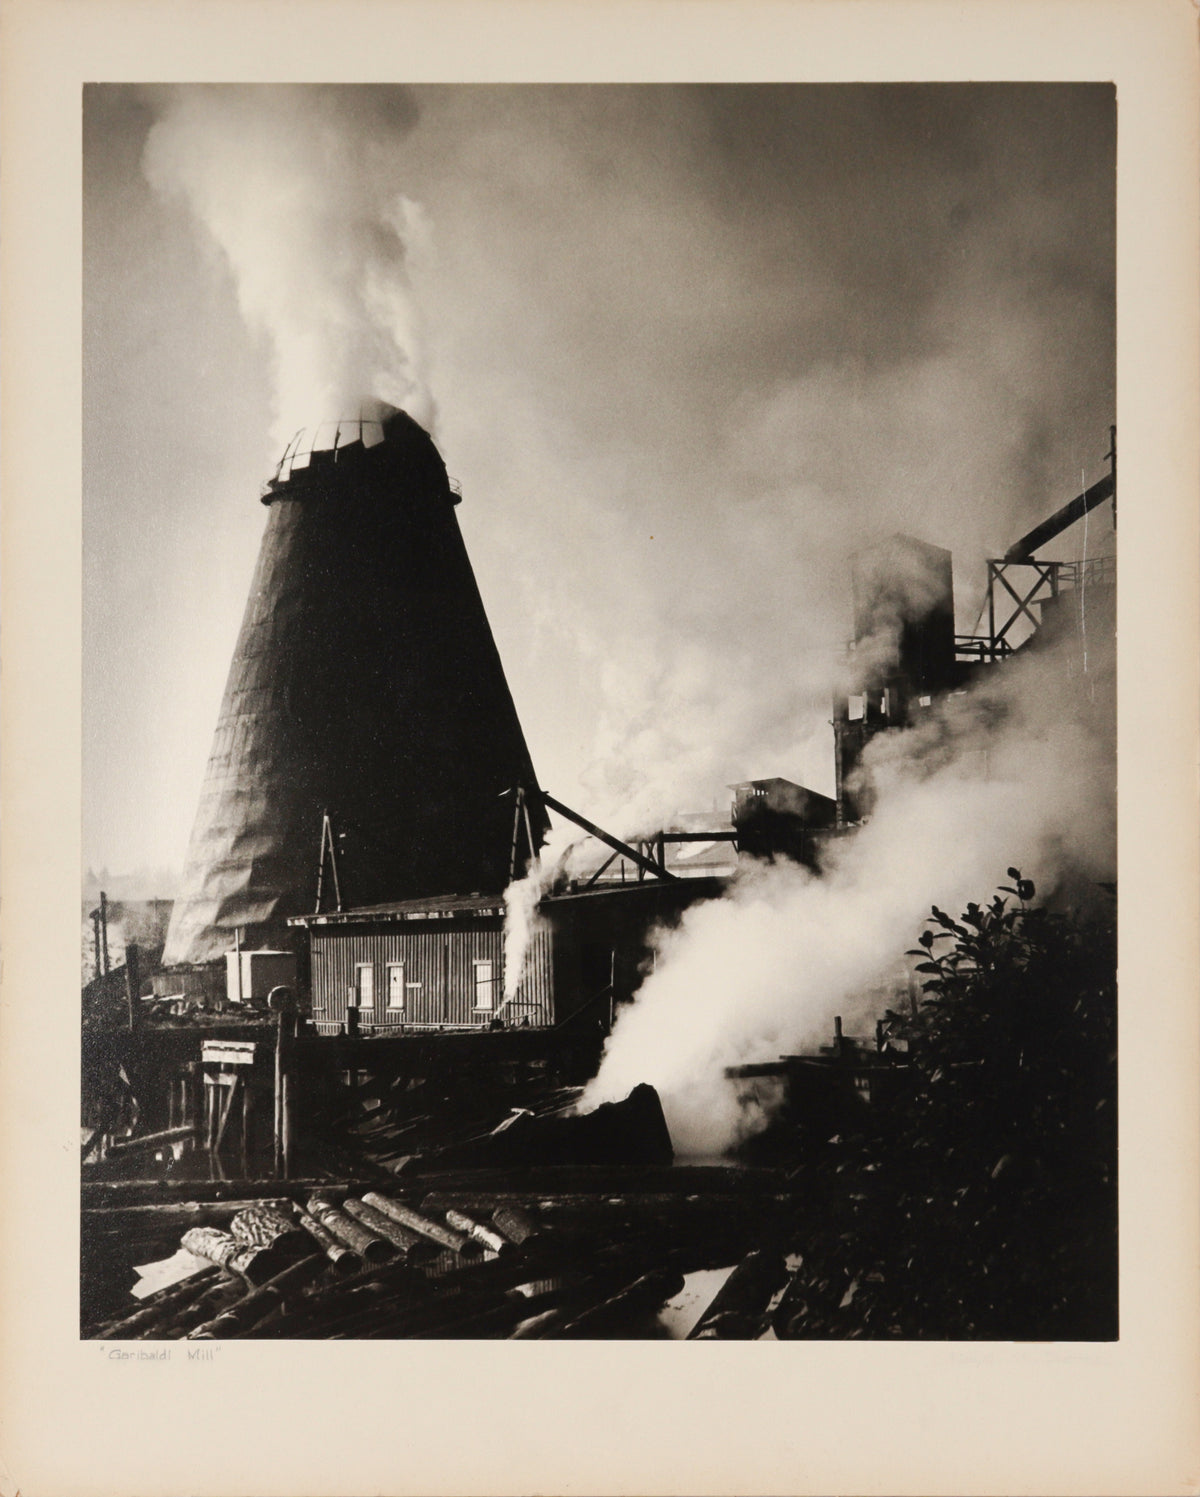 &lt;i&gt;Garibaldi Mill&lt;/i&gt; &lt;br&gt;1961 Photograph &lt;br&gt;&lt;br&gt;#C2373